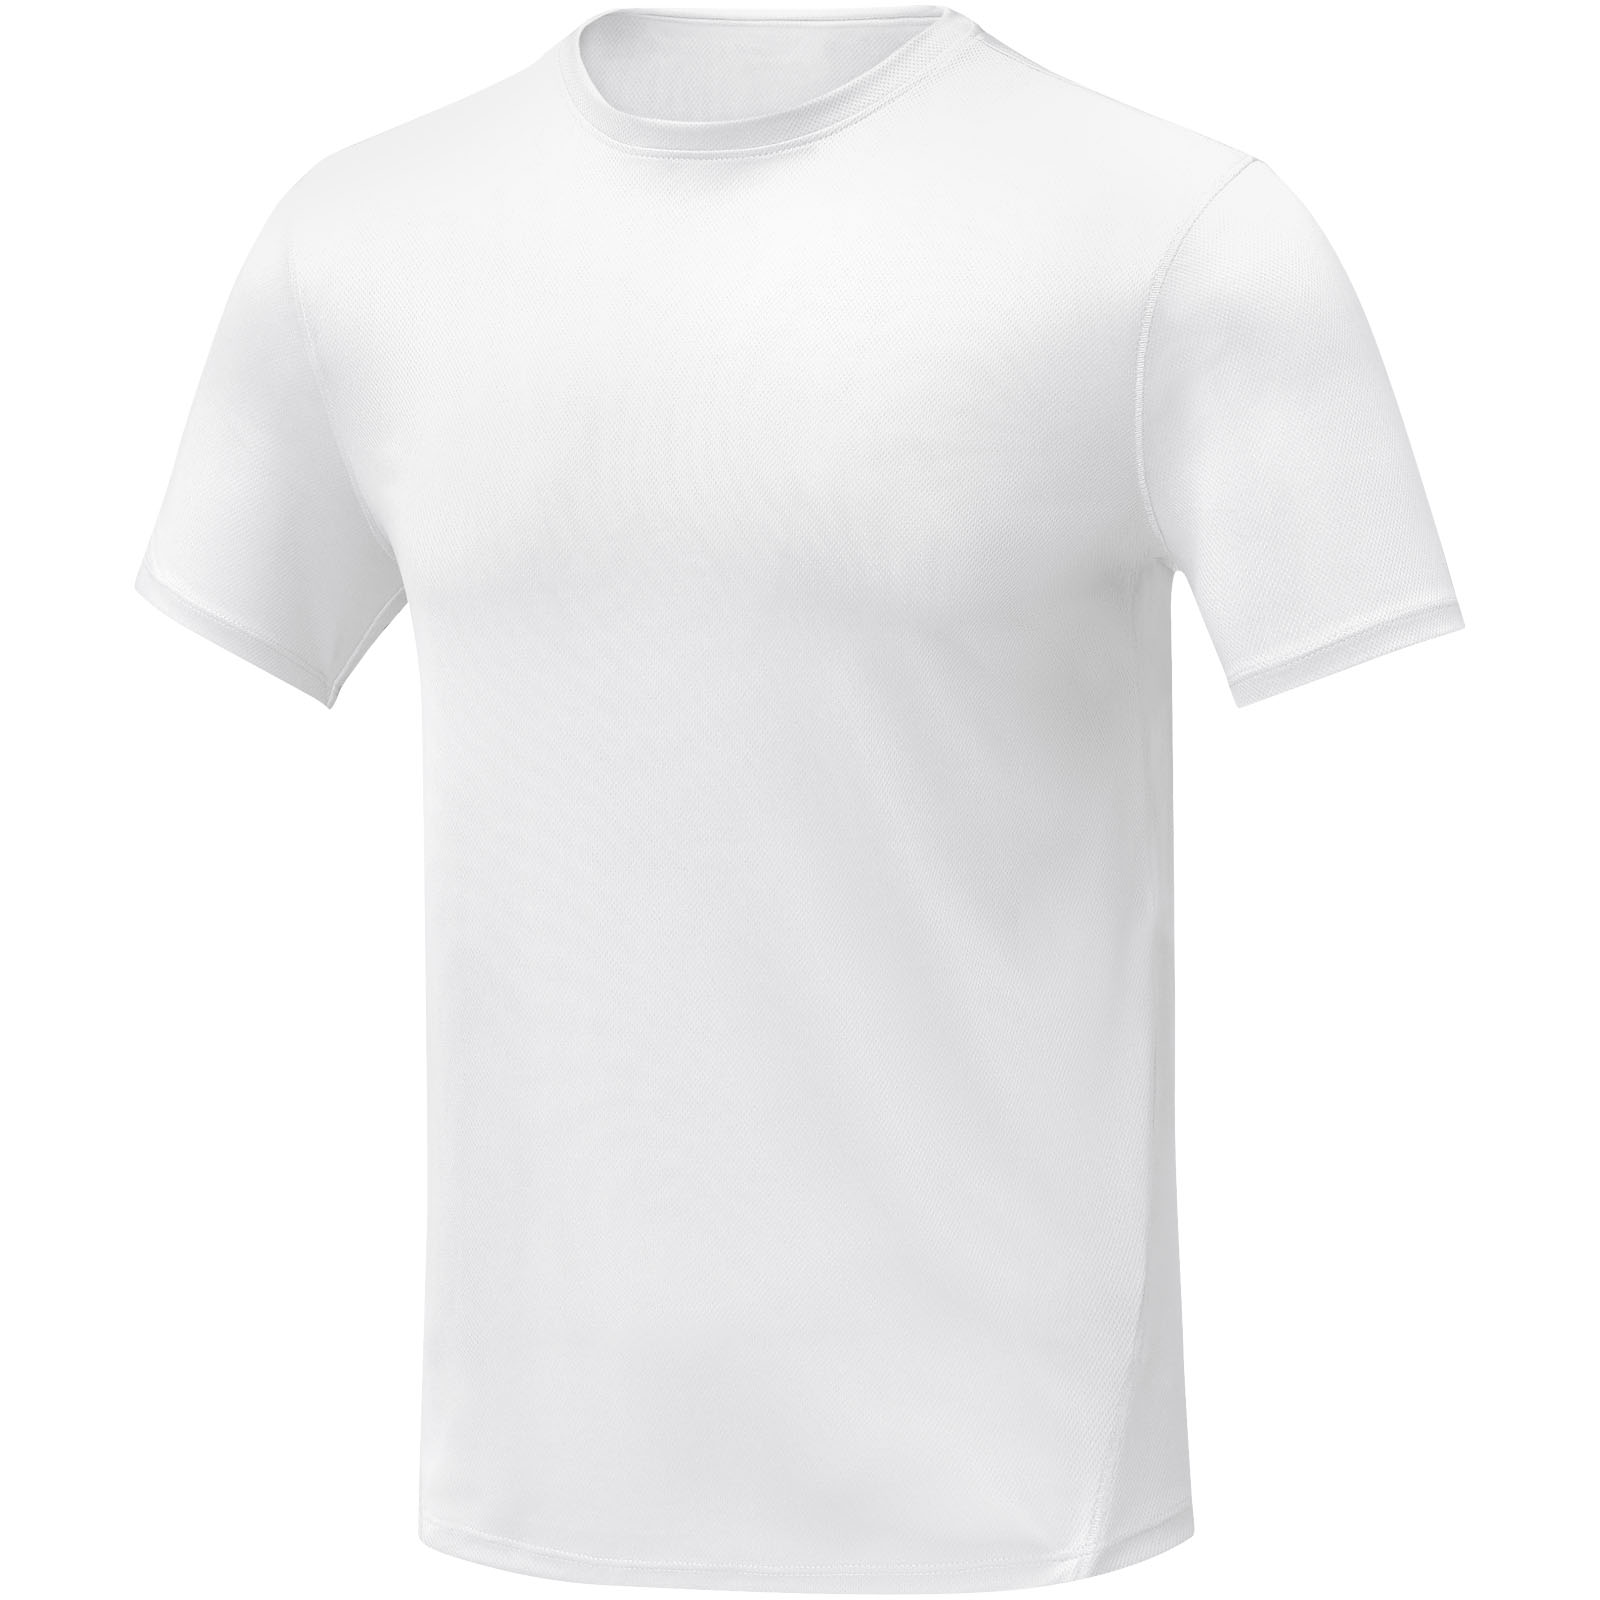 Clothing - Kratos short sleeve men's cool fit t-shirt